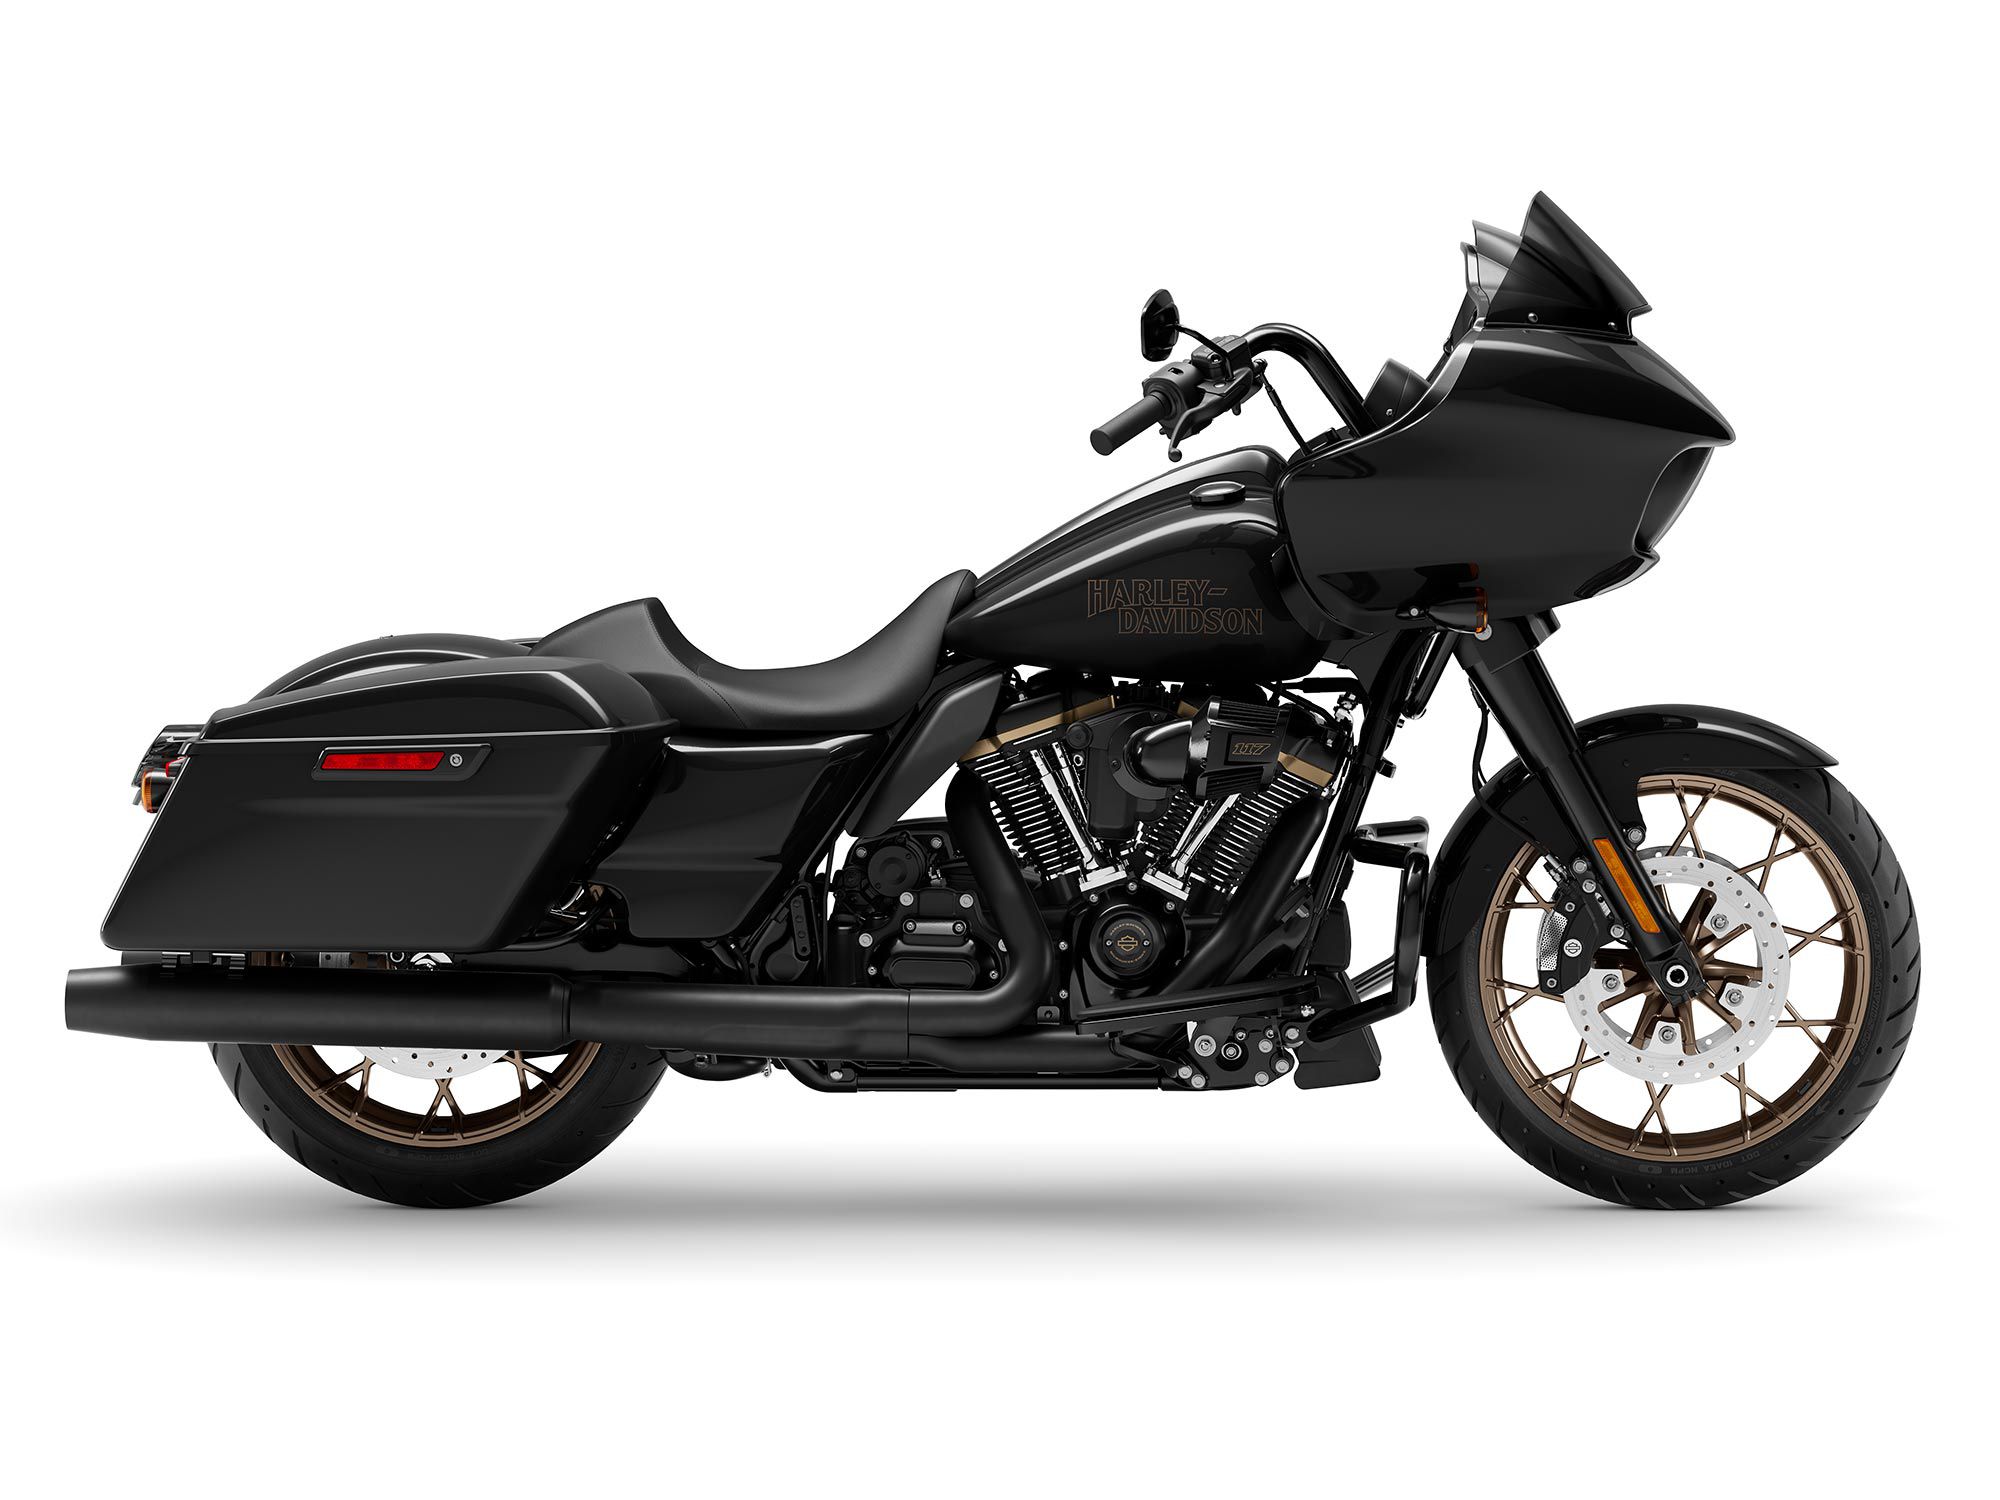 2022 Harley-Davidson Road Glide ST in Vivid Black.